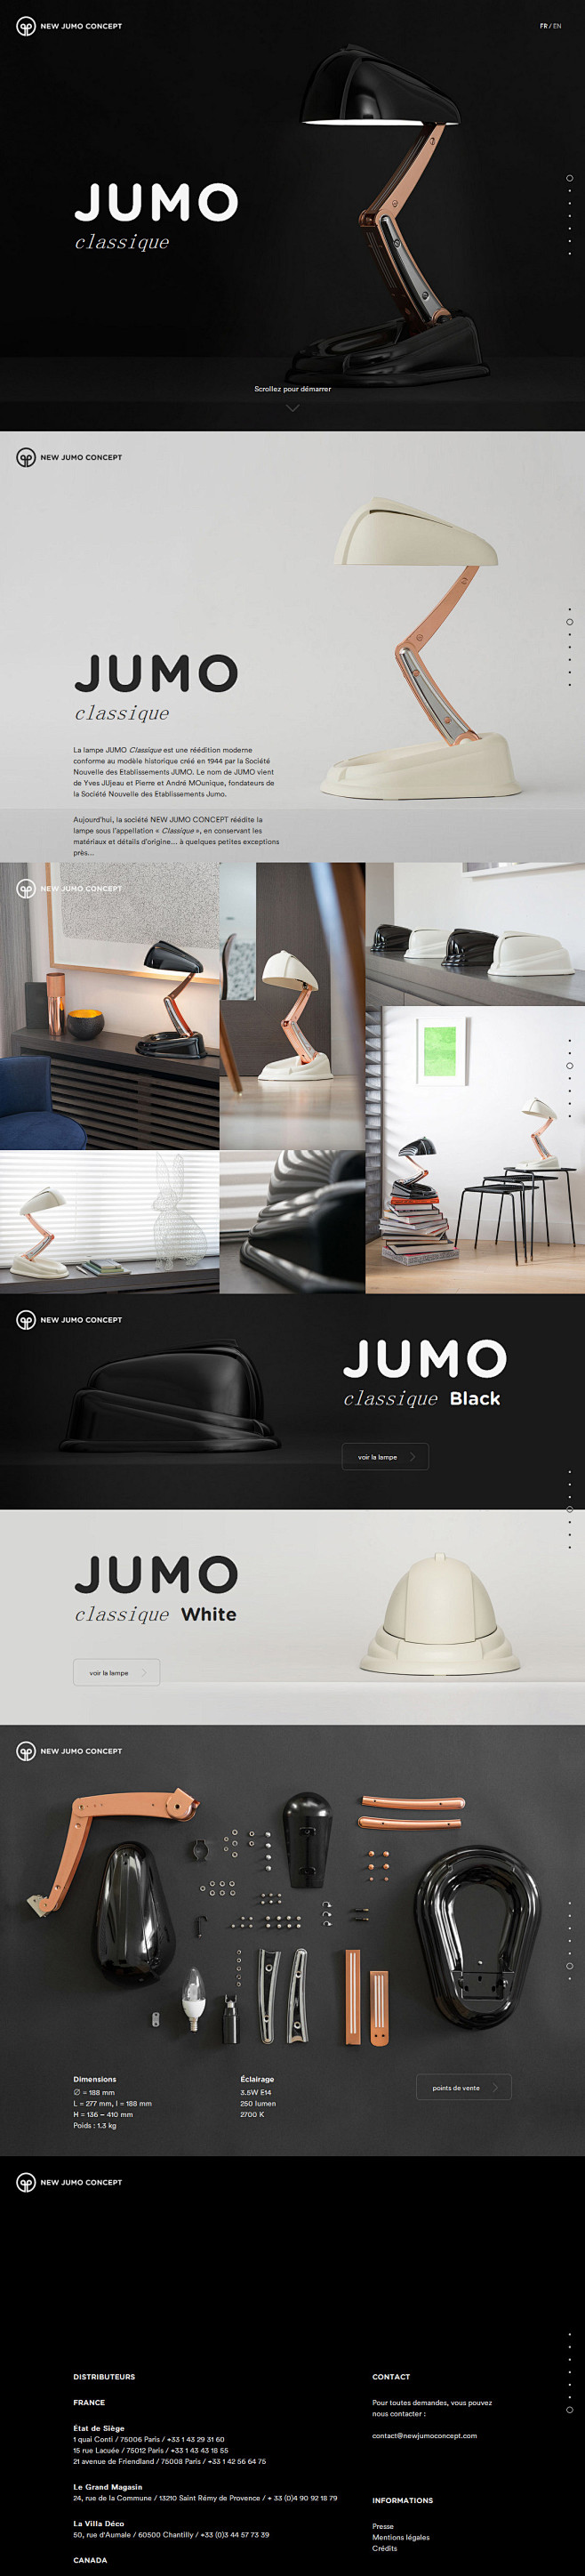 New JUMO Concept 产品 ...